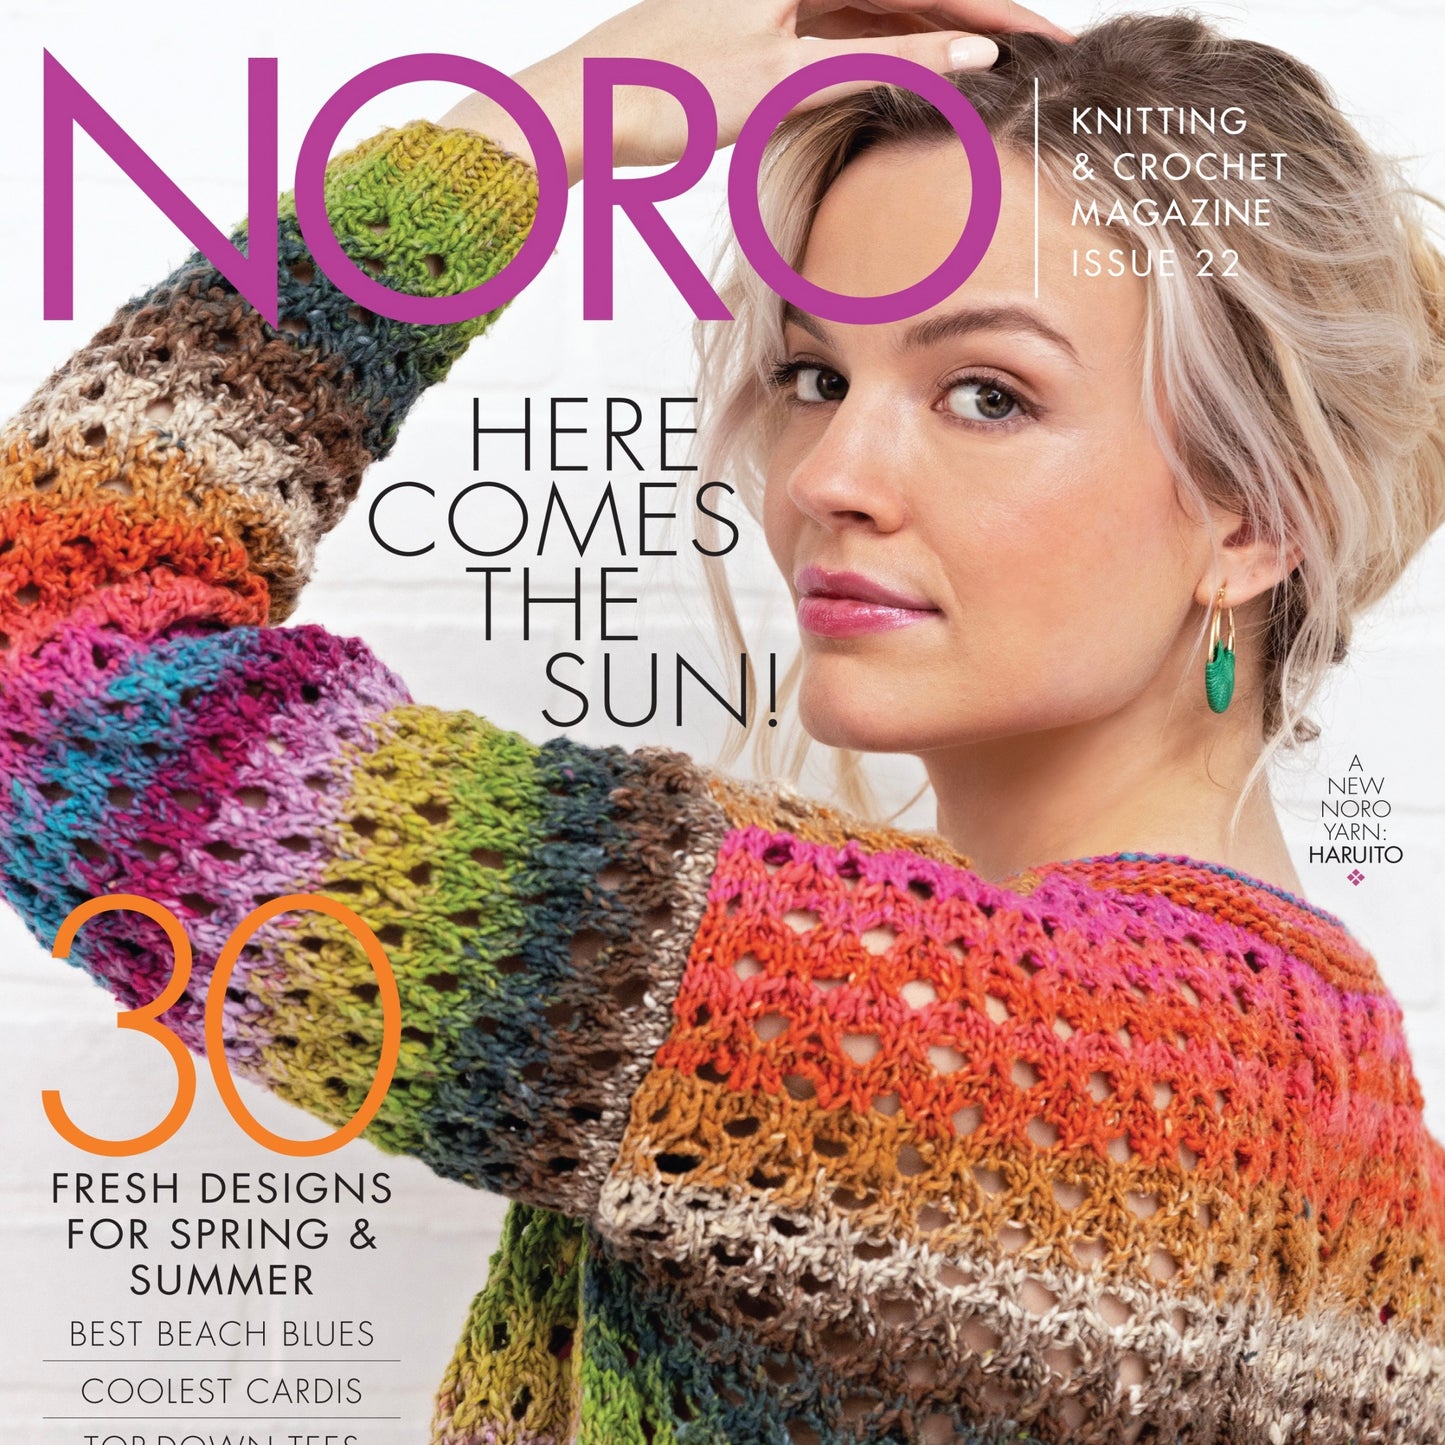 Noro Magazine Issue 22